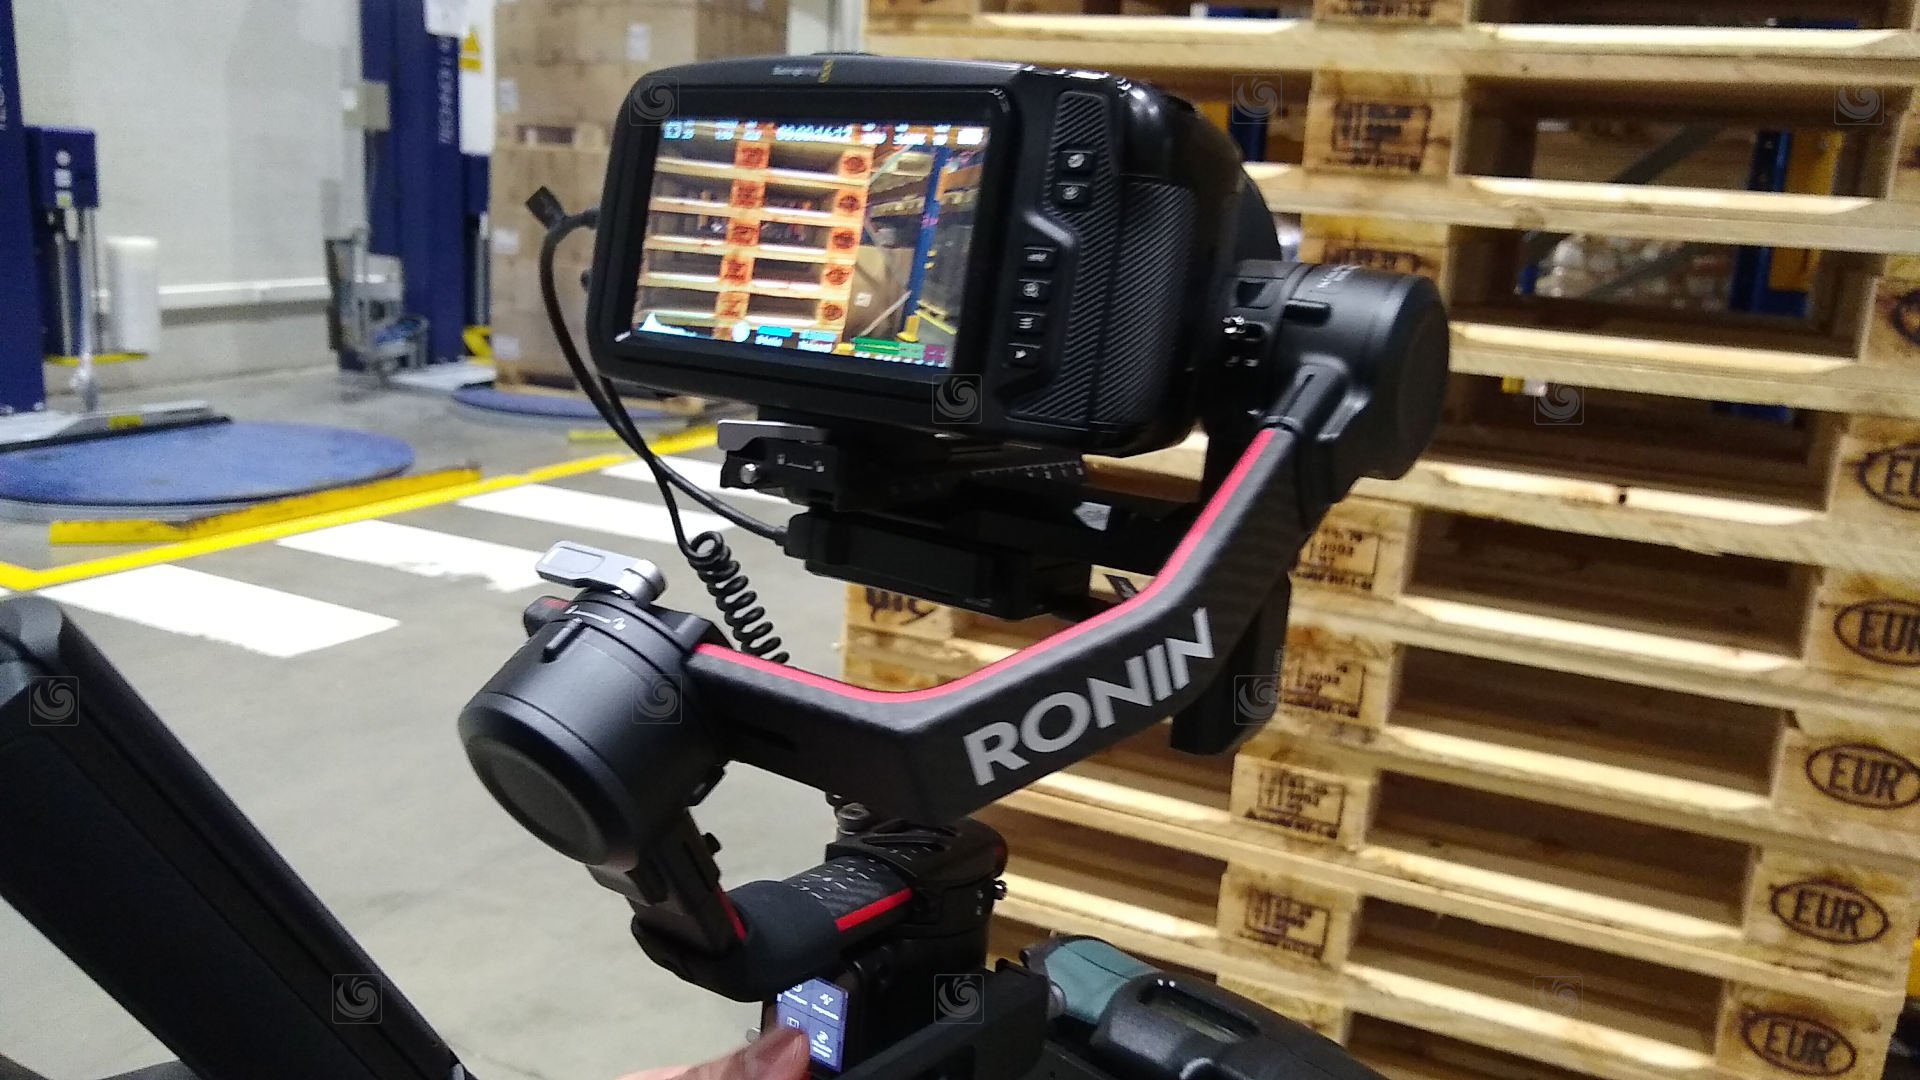 Blackmagic BMPCC4K digital cinematography camera mounted on DJI Ronin stabilizer